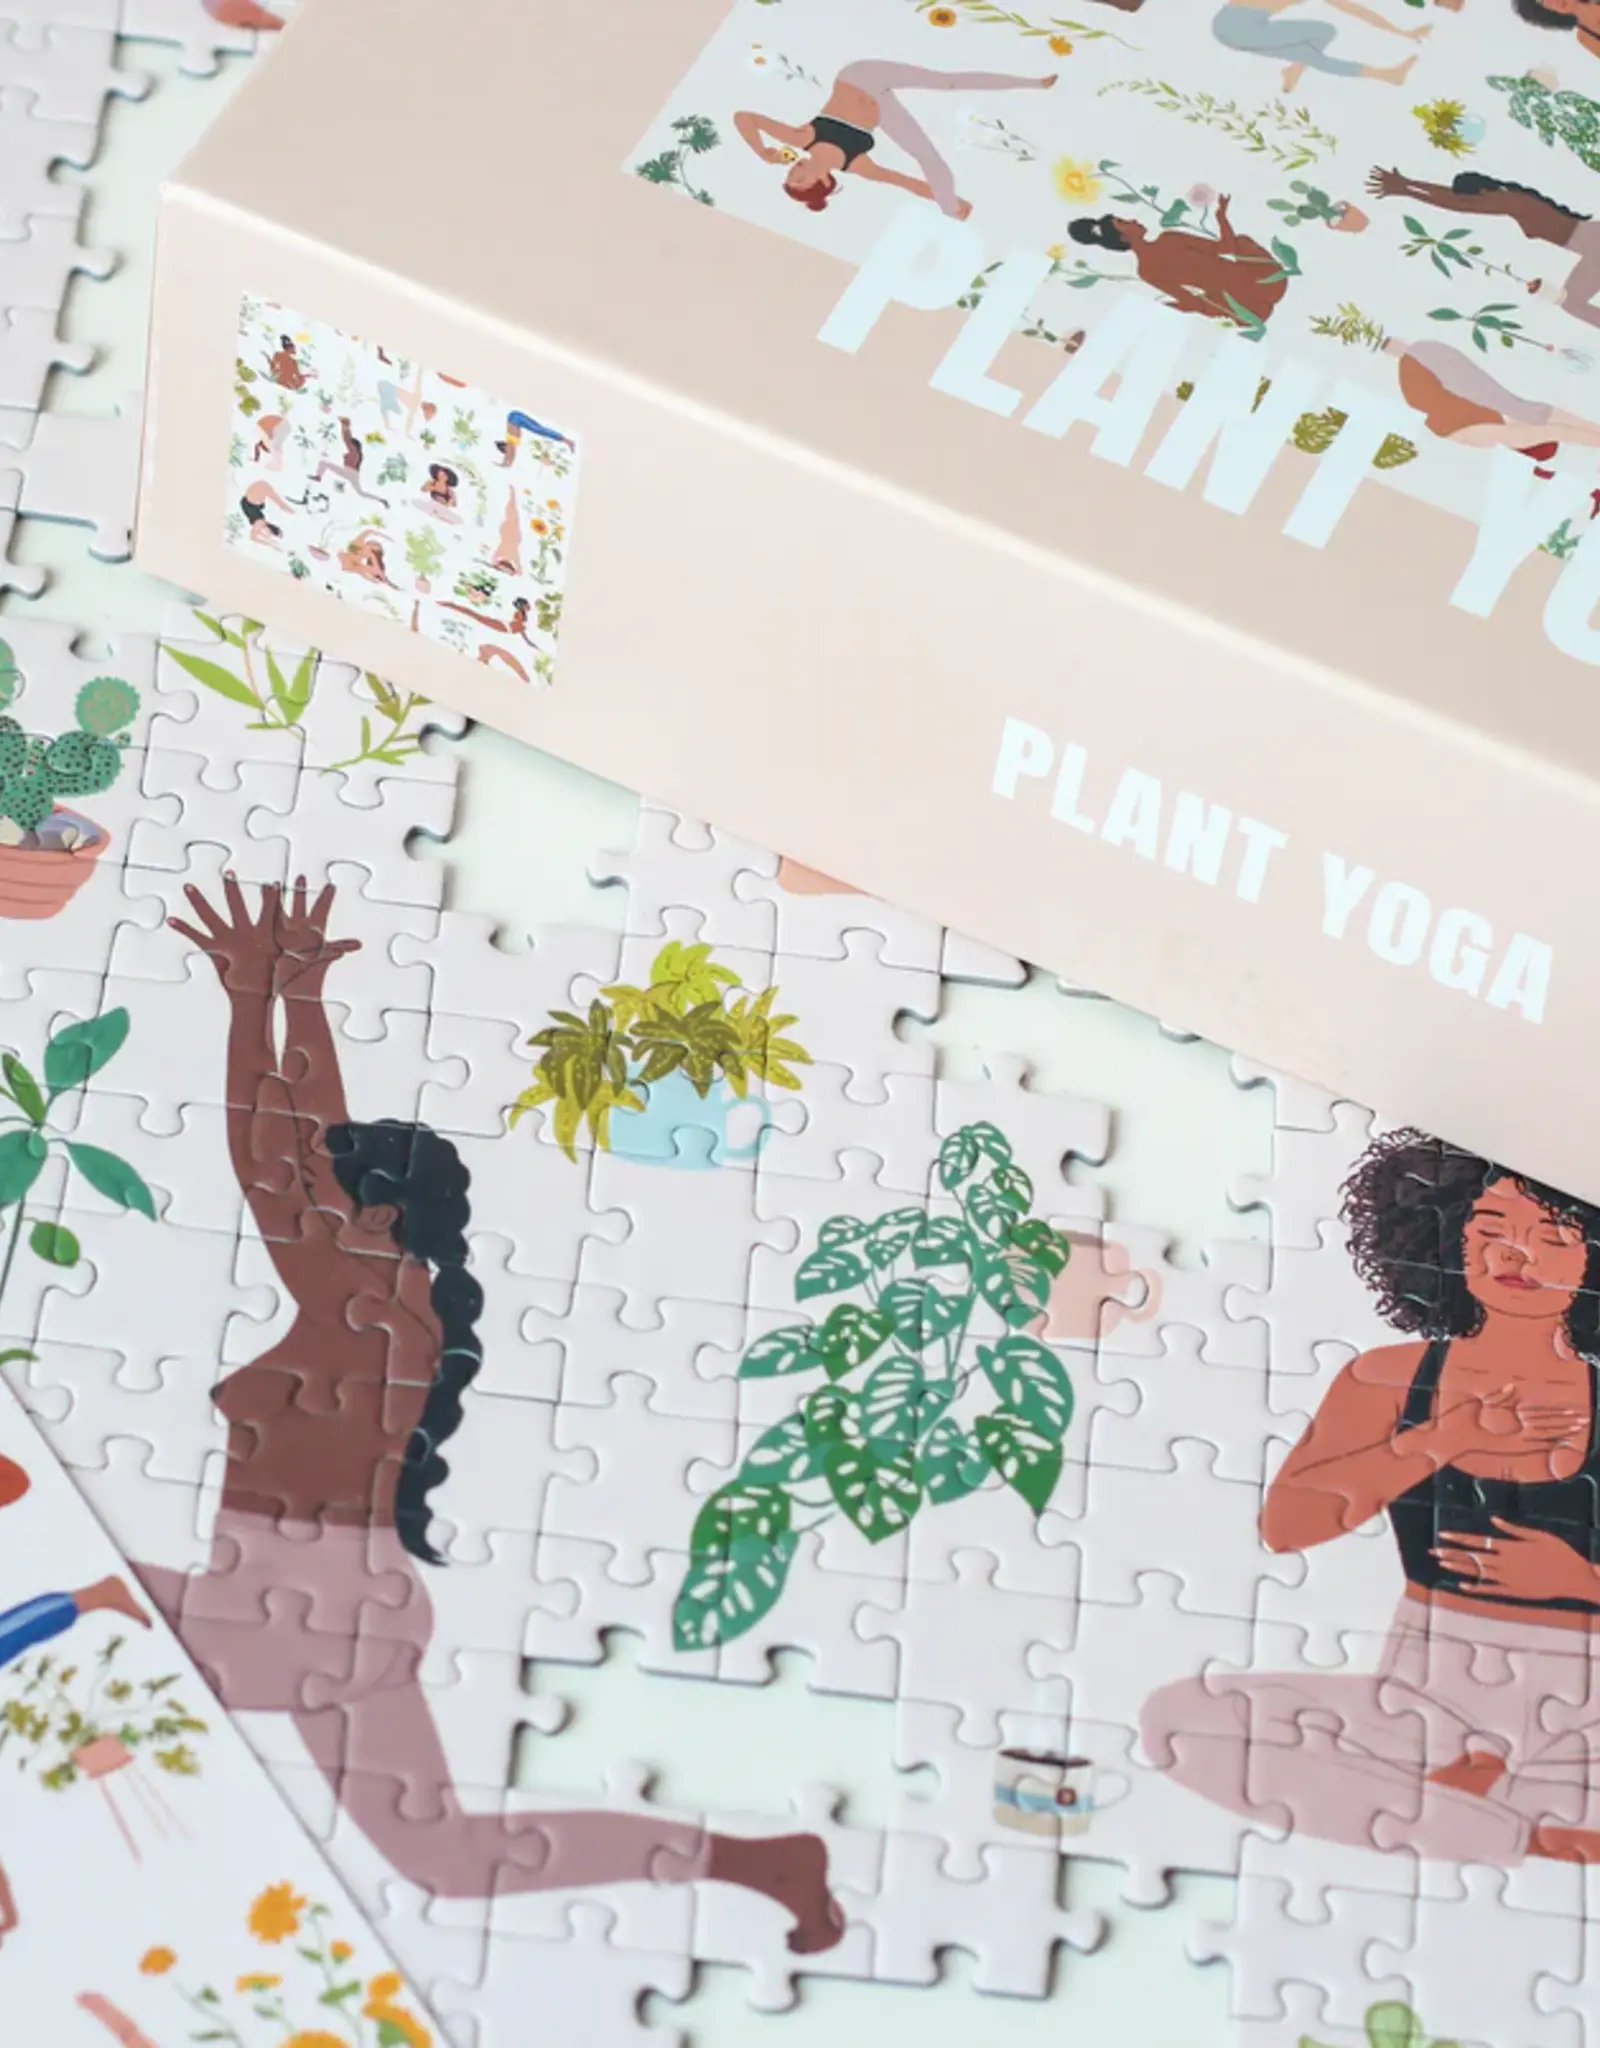 Piecely puzzle ' Plant Yoga' - 1000 pieces